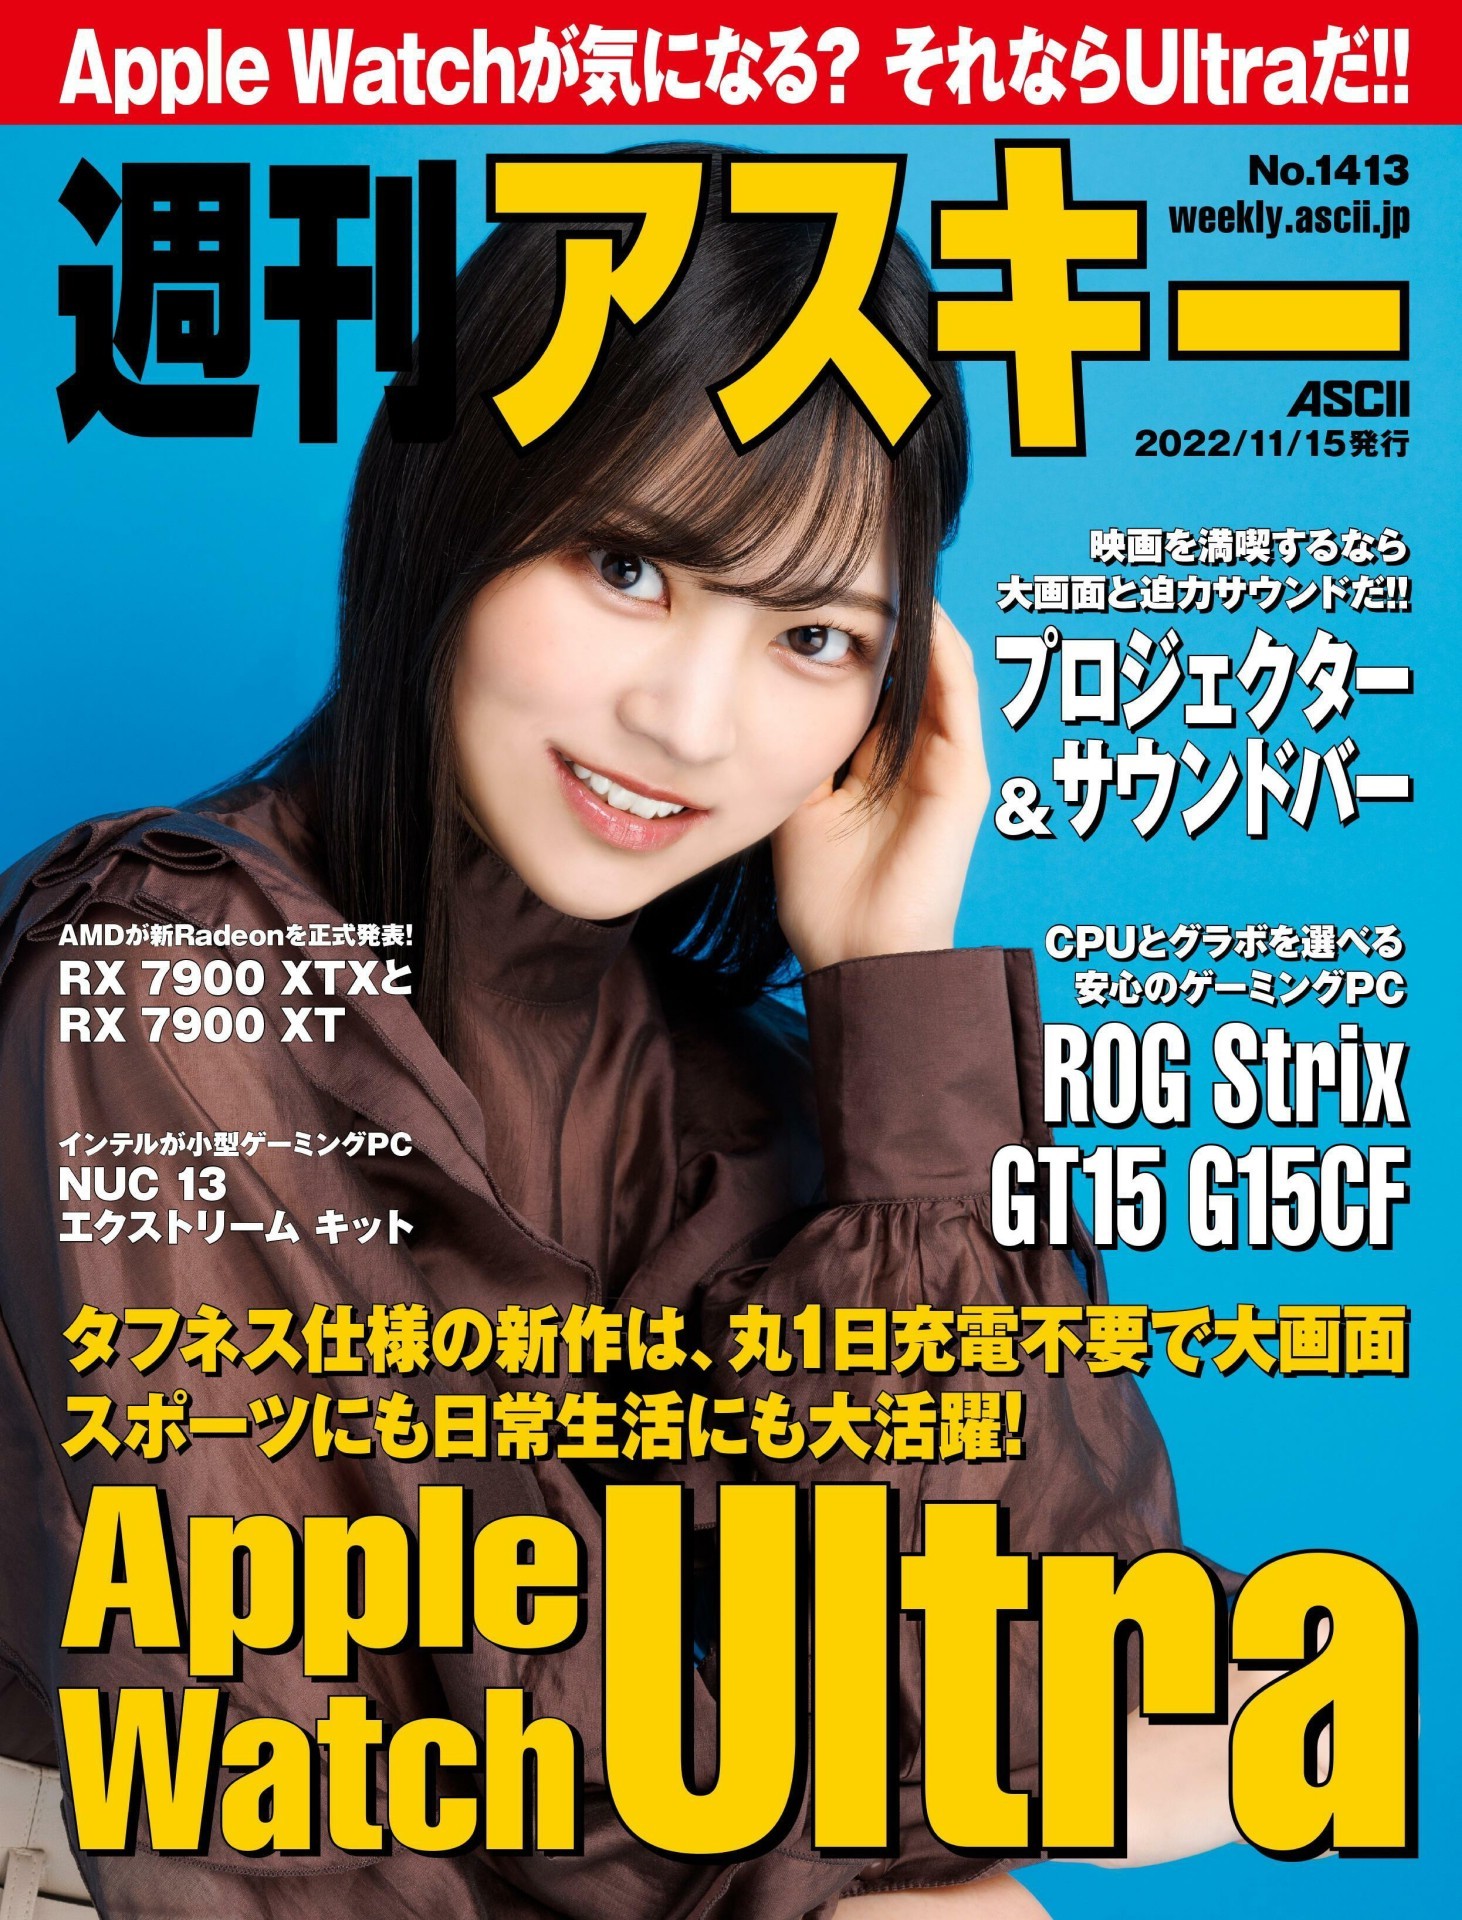 USA 宇咲, Weekly ASCII 2022.11.15 (週刊アスキー 2022年11月15日号) - itotii